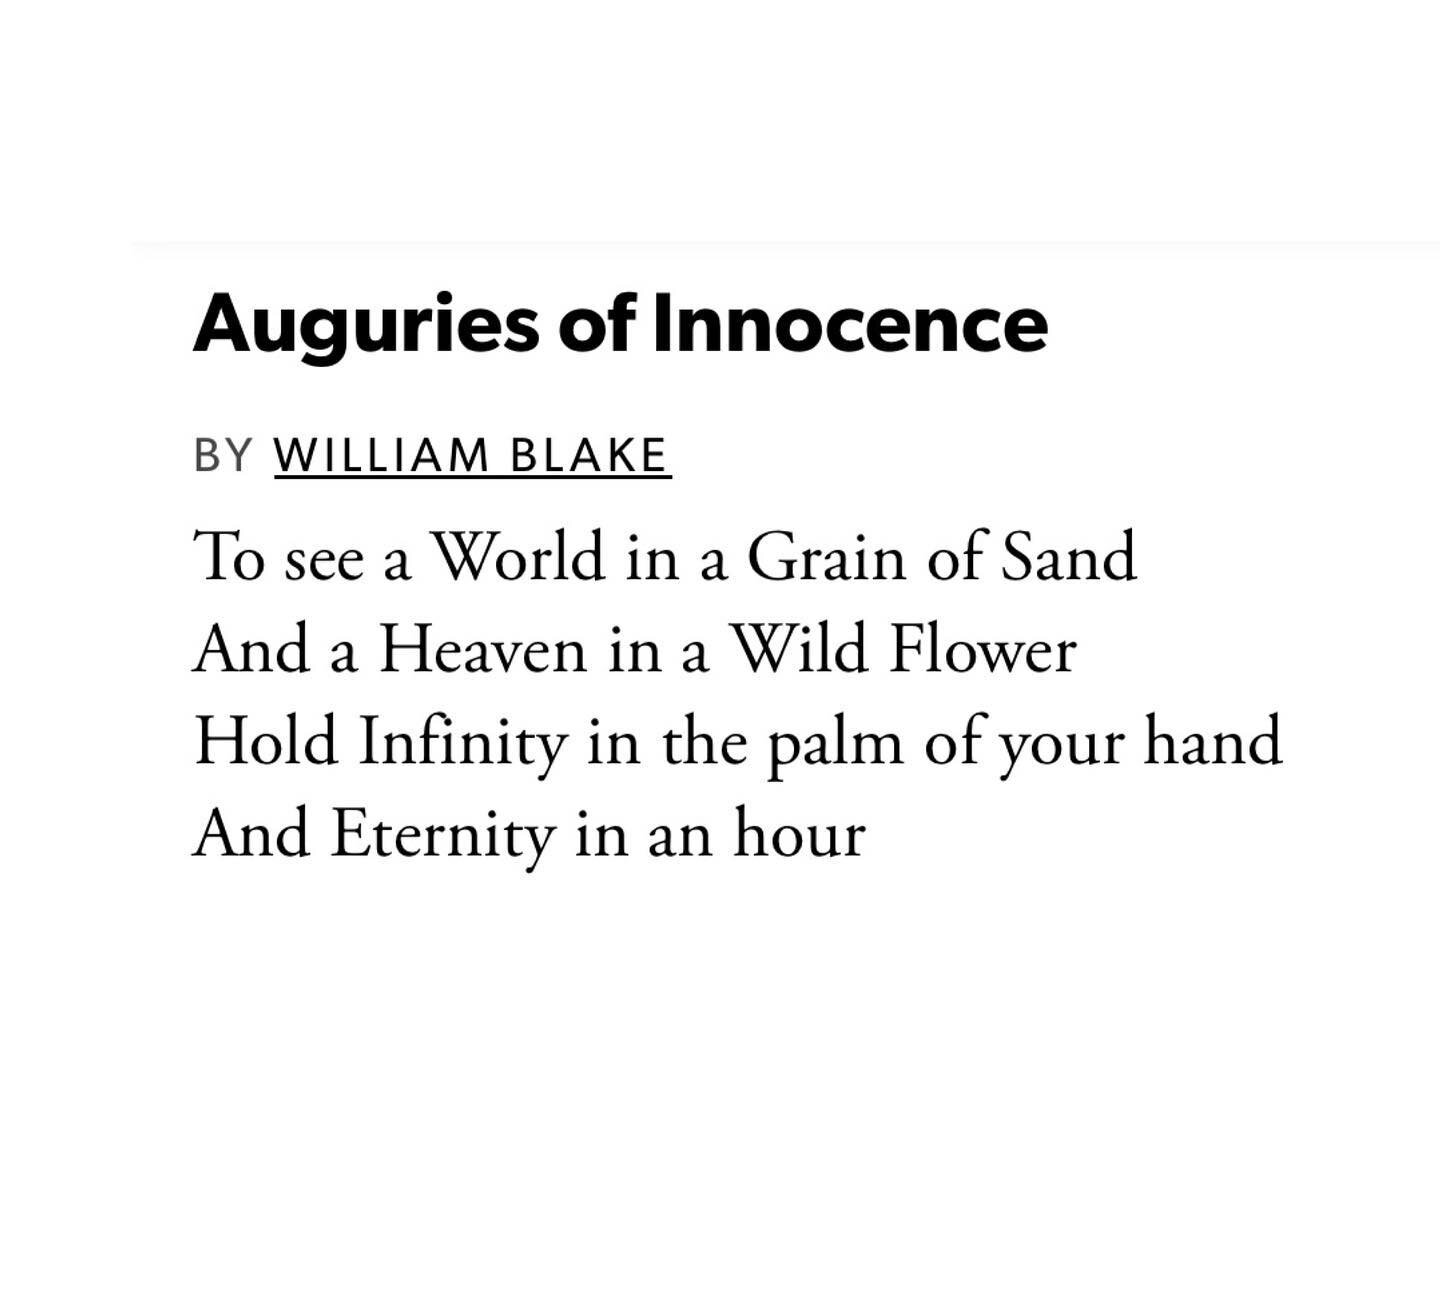 #theauguriesofinnocence by #williamblake 
.
#poetrycommunity #poetrylovers